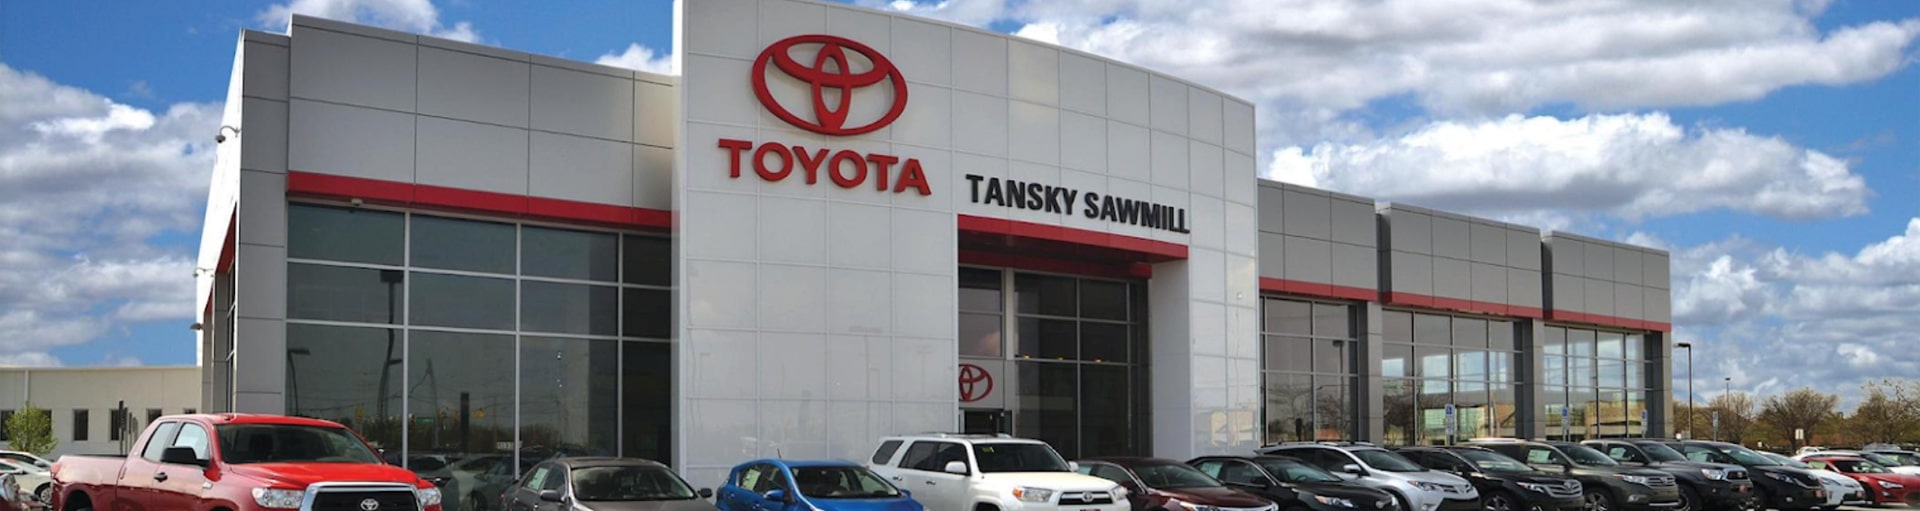 Tansky Sawmill Toyota Multi-Point Inspection Service